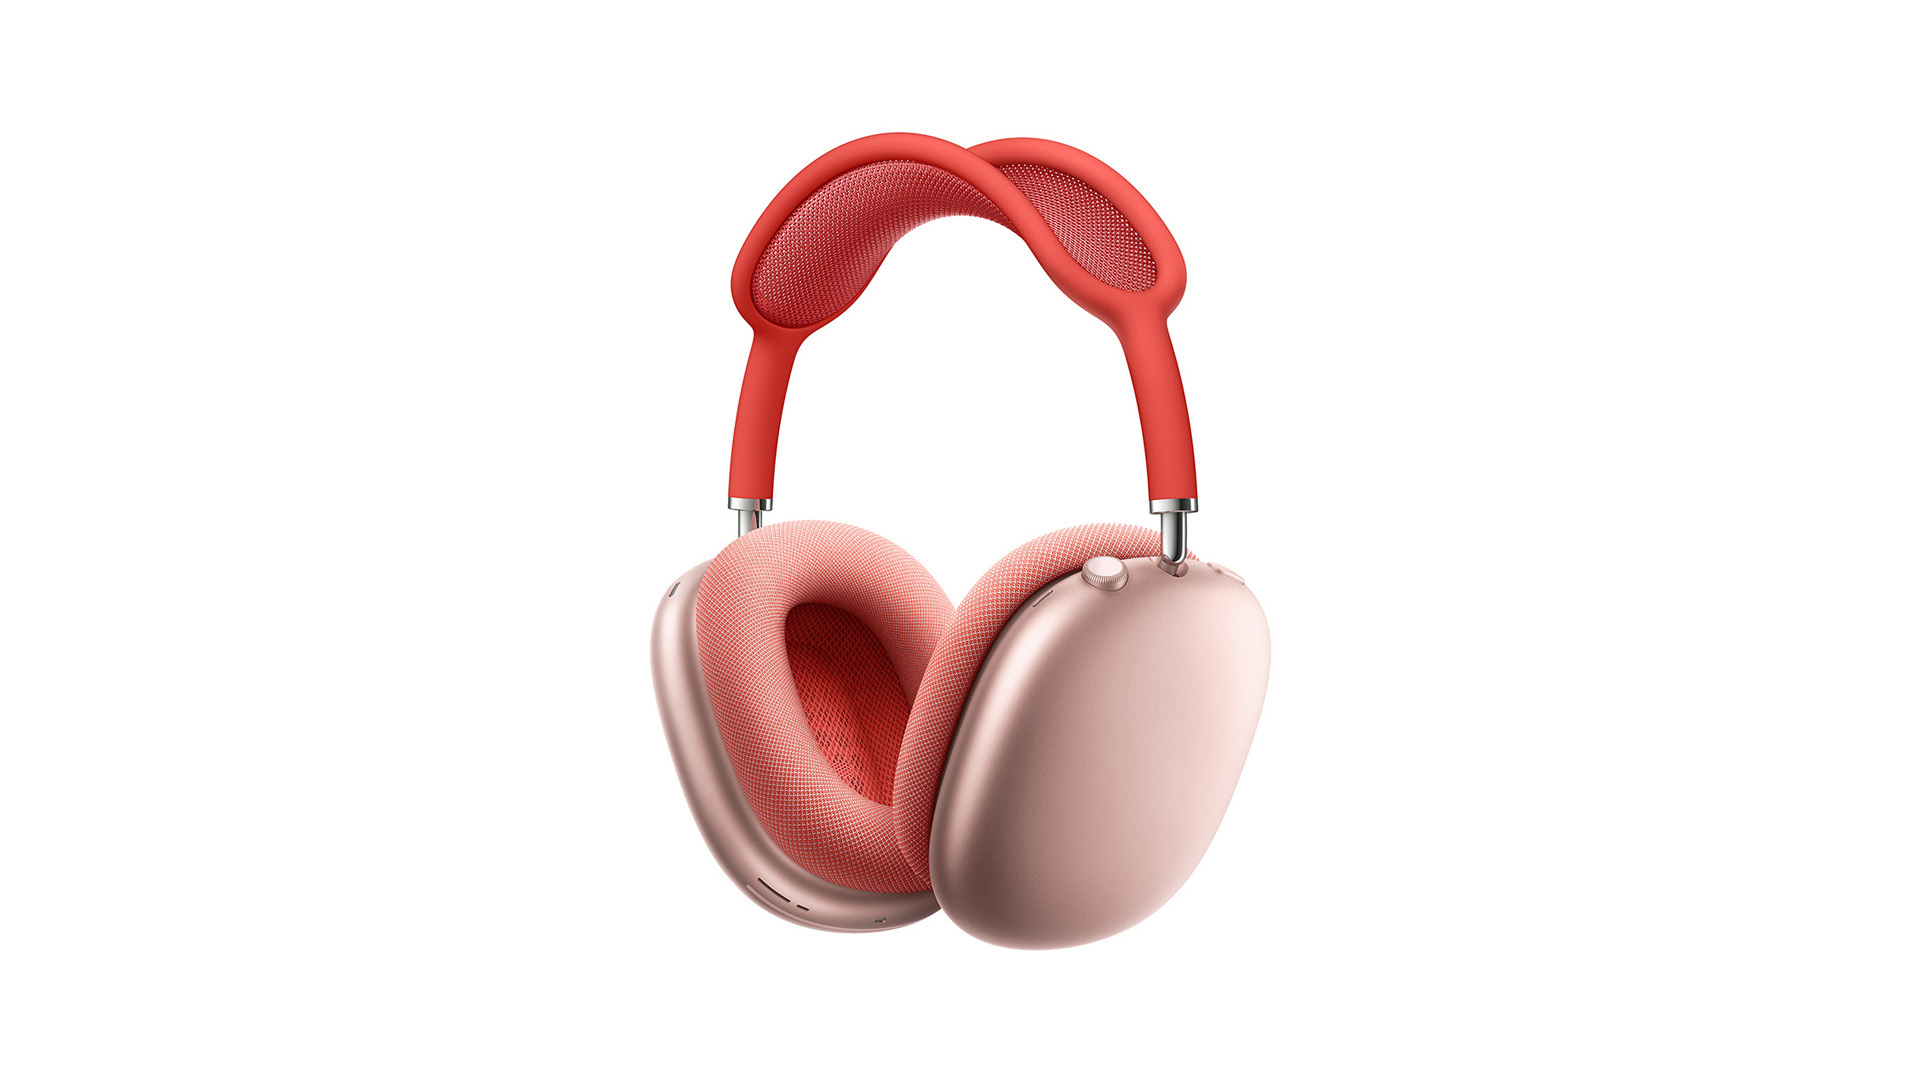 Best iPhone headphones 2022: Apple AirPods Max